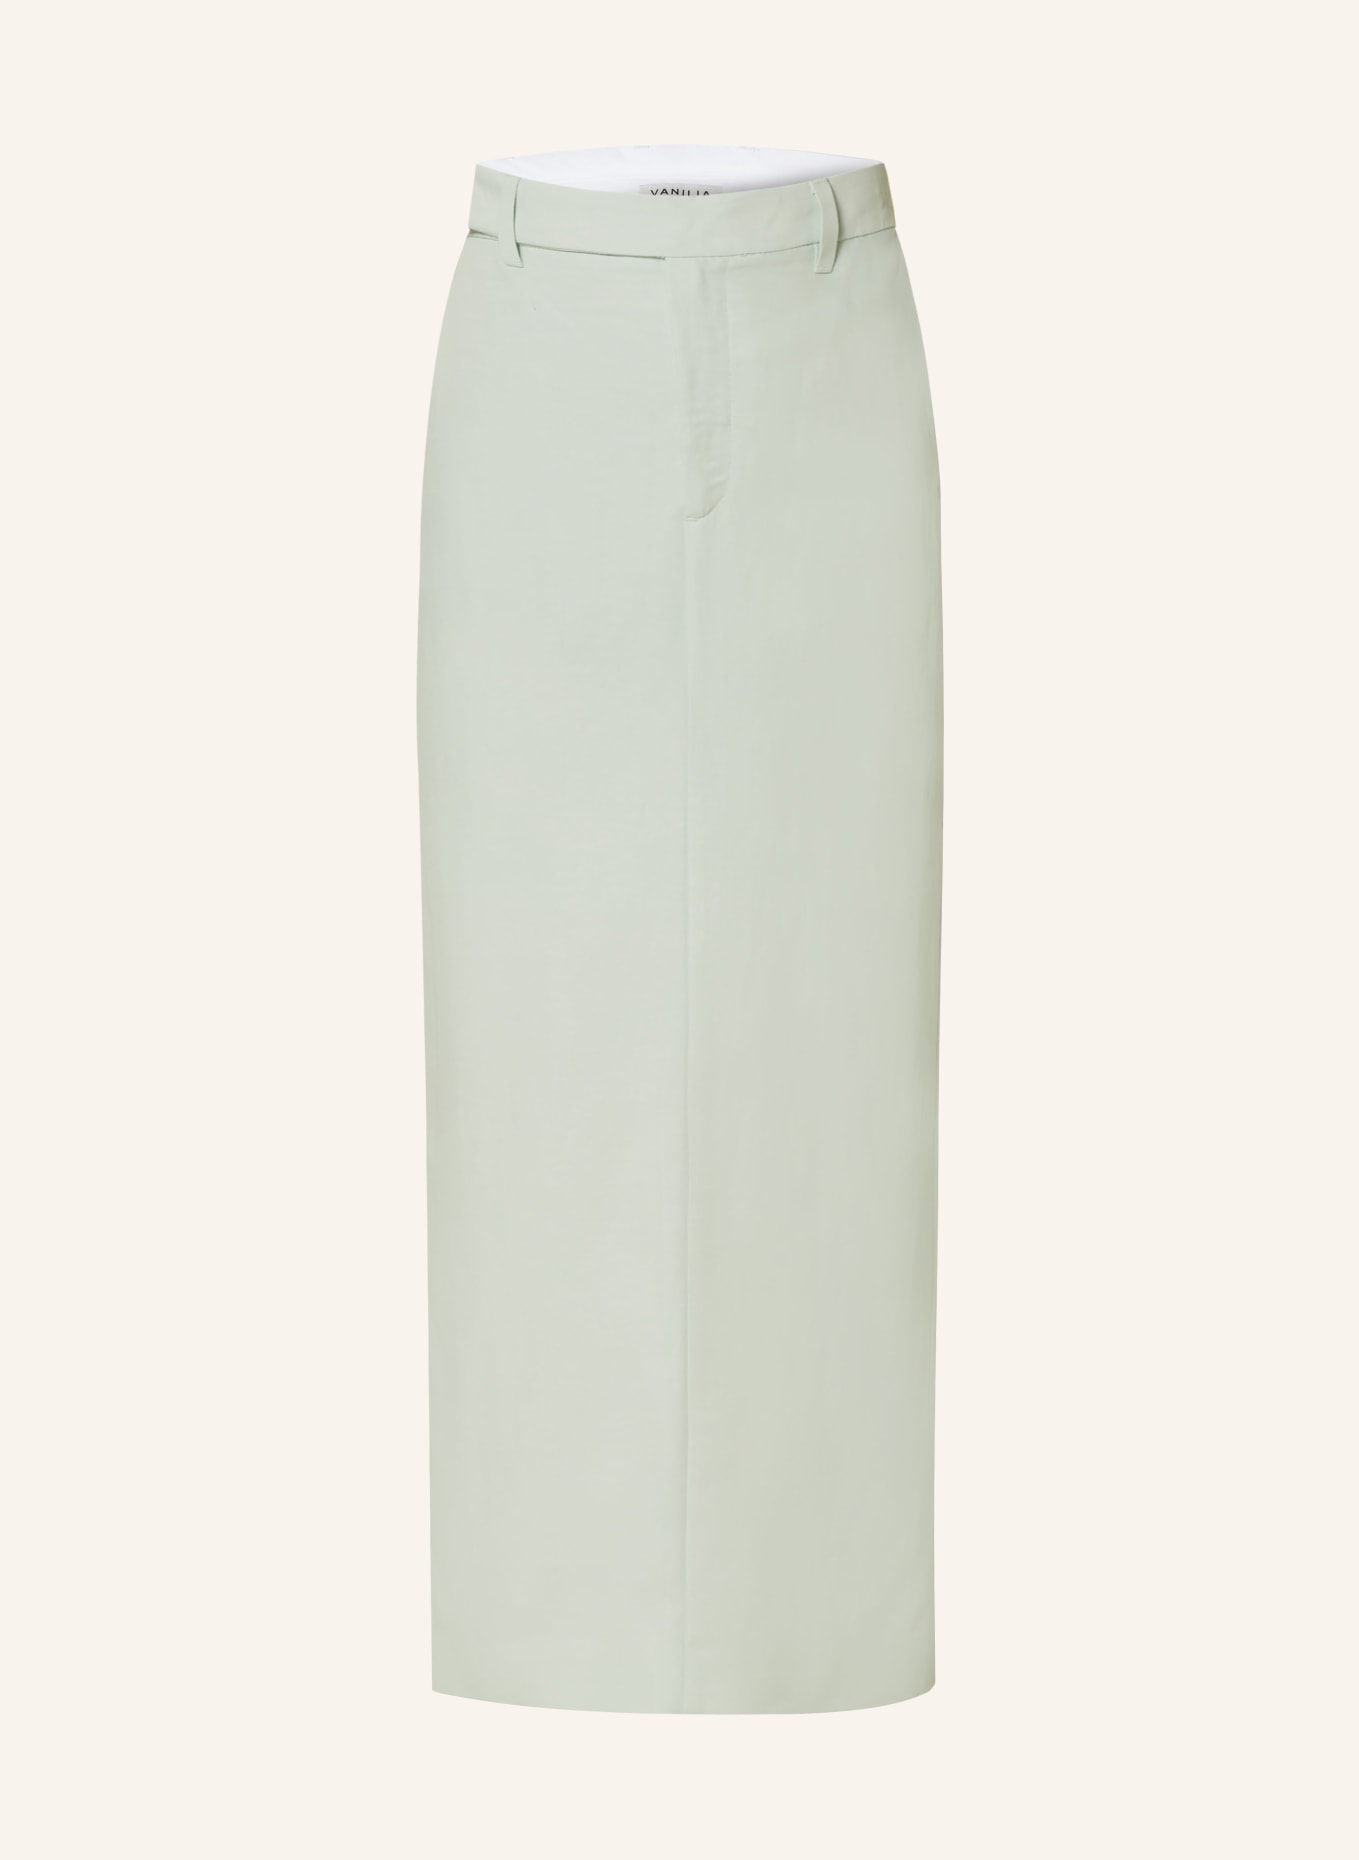 VANILIA Skirt, Color: LIGHT BLUE (Image 1)